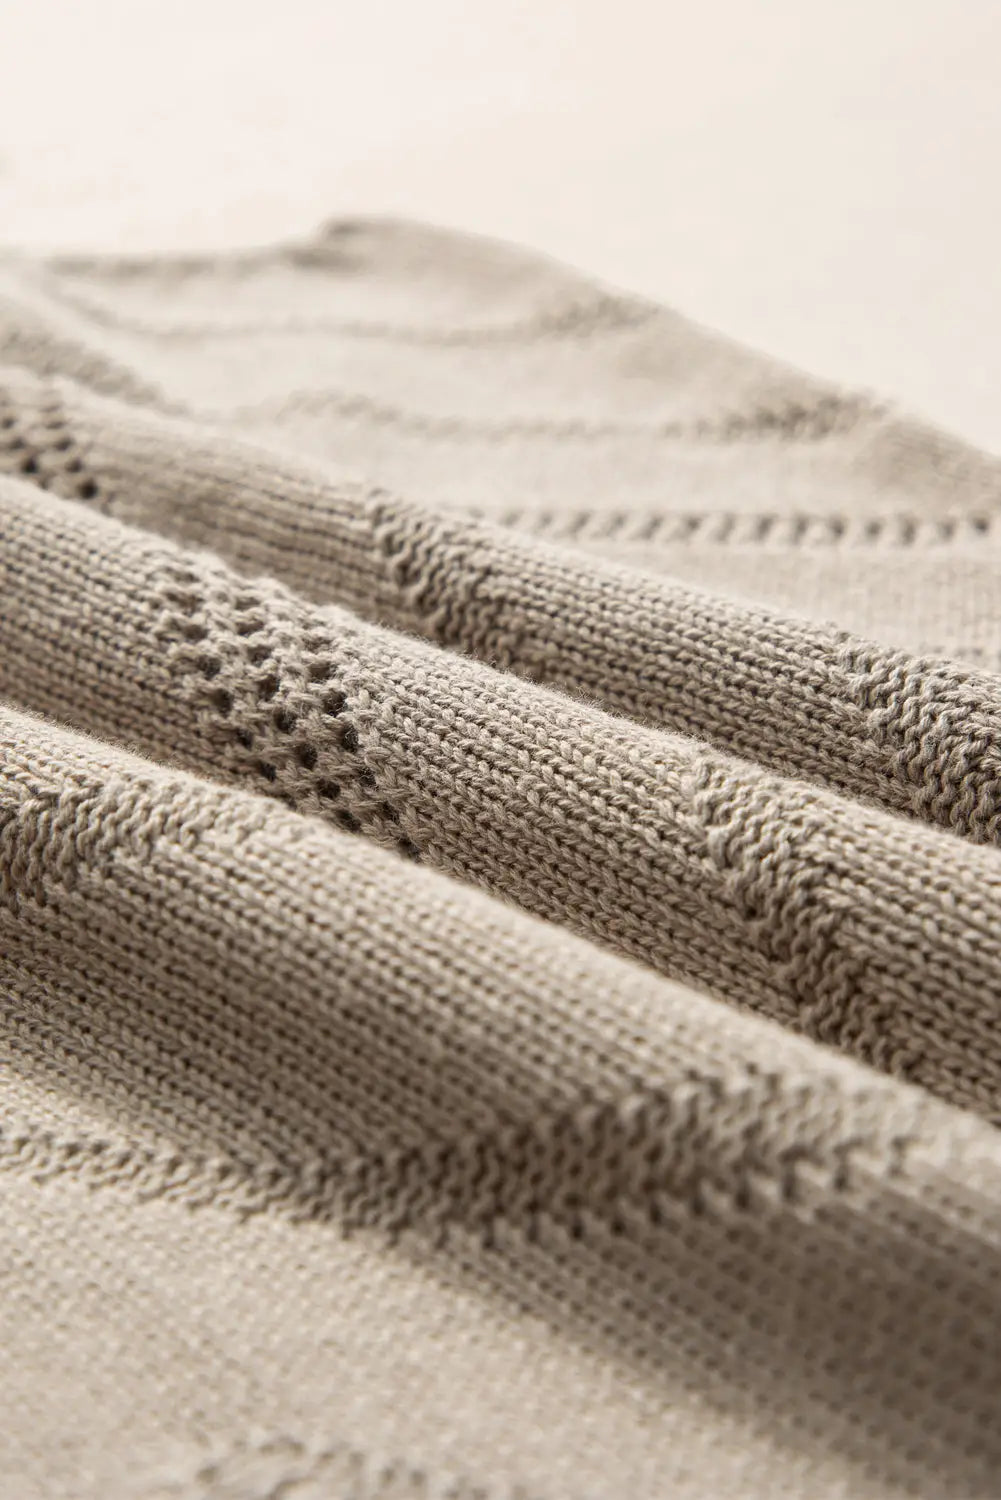 White chevron pointelle knit sweater vest - tops/tank tops